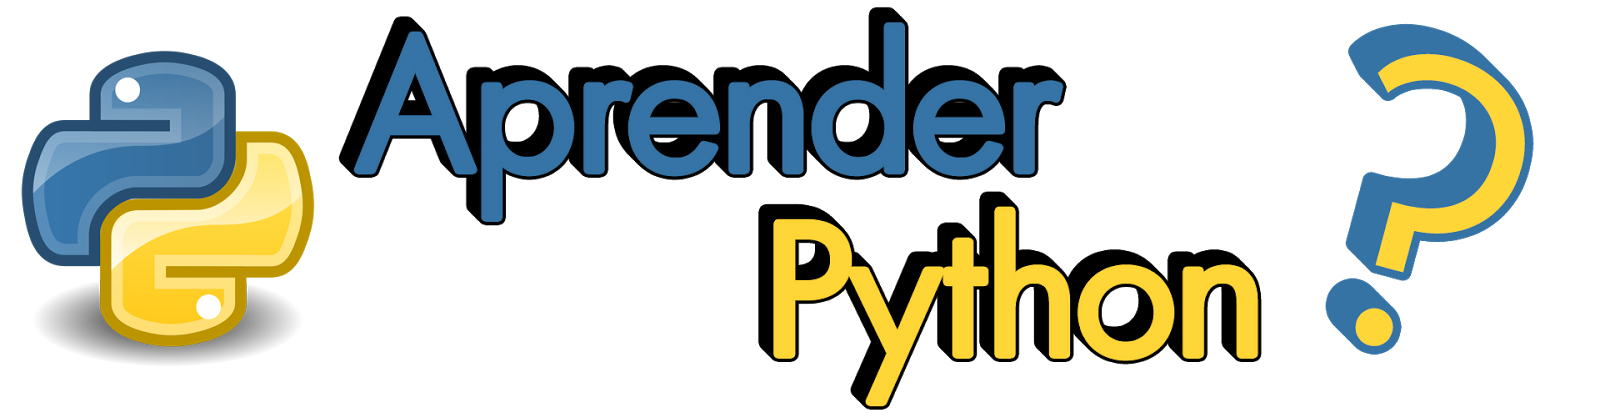 Aprender Python